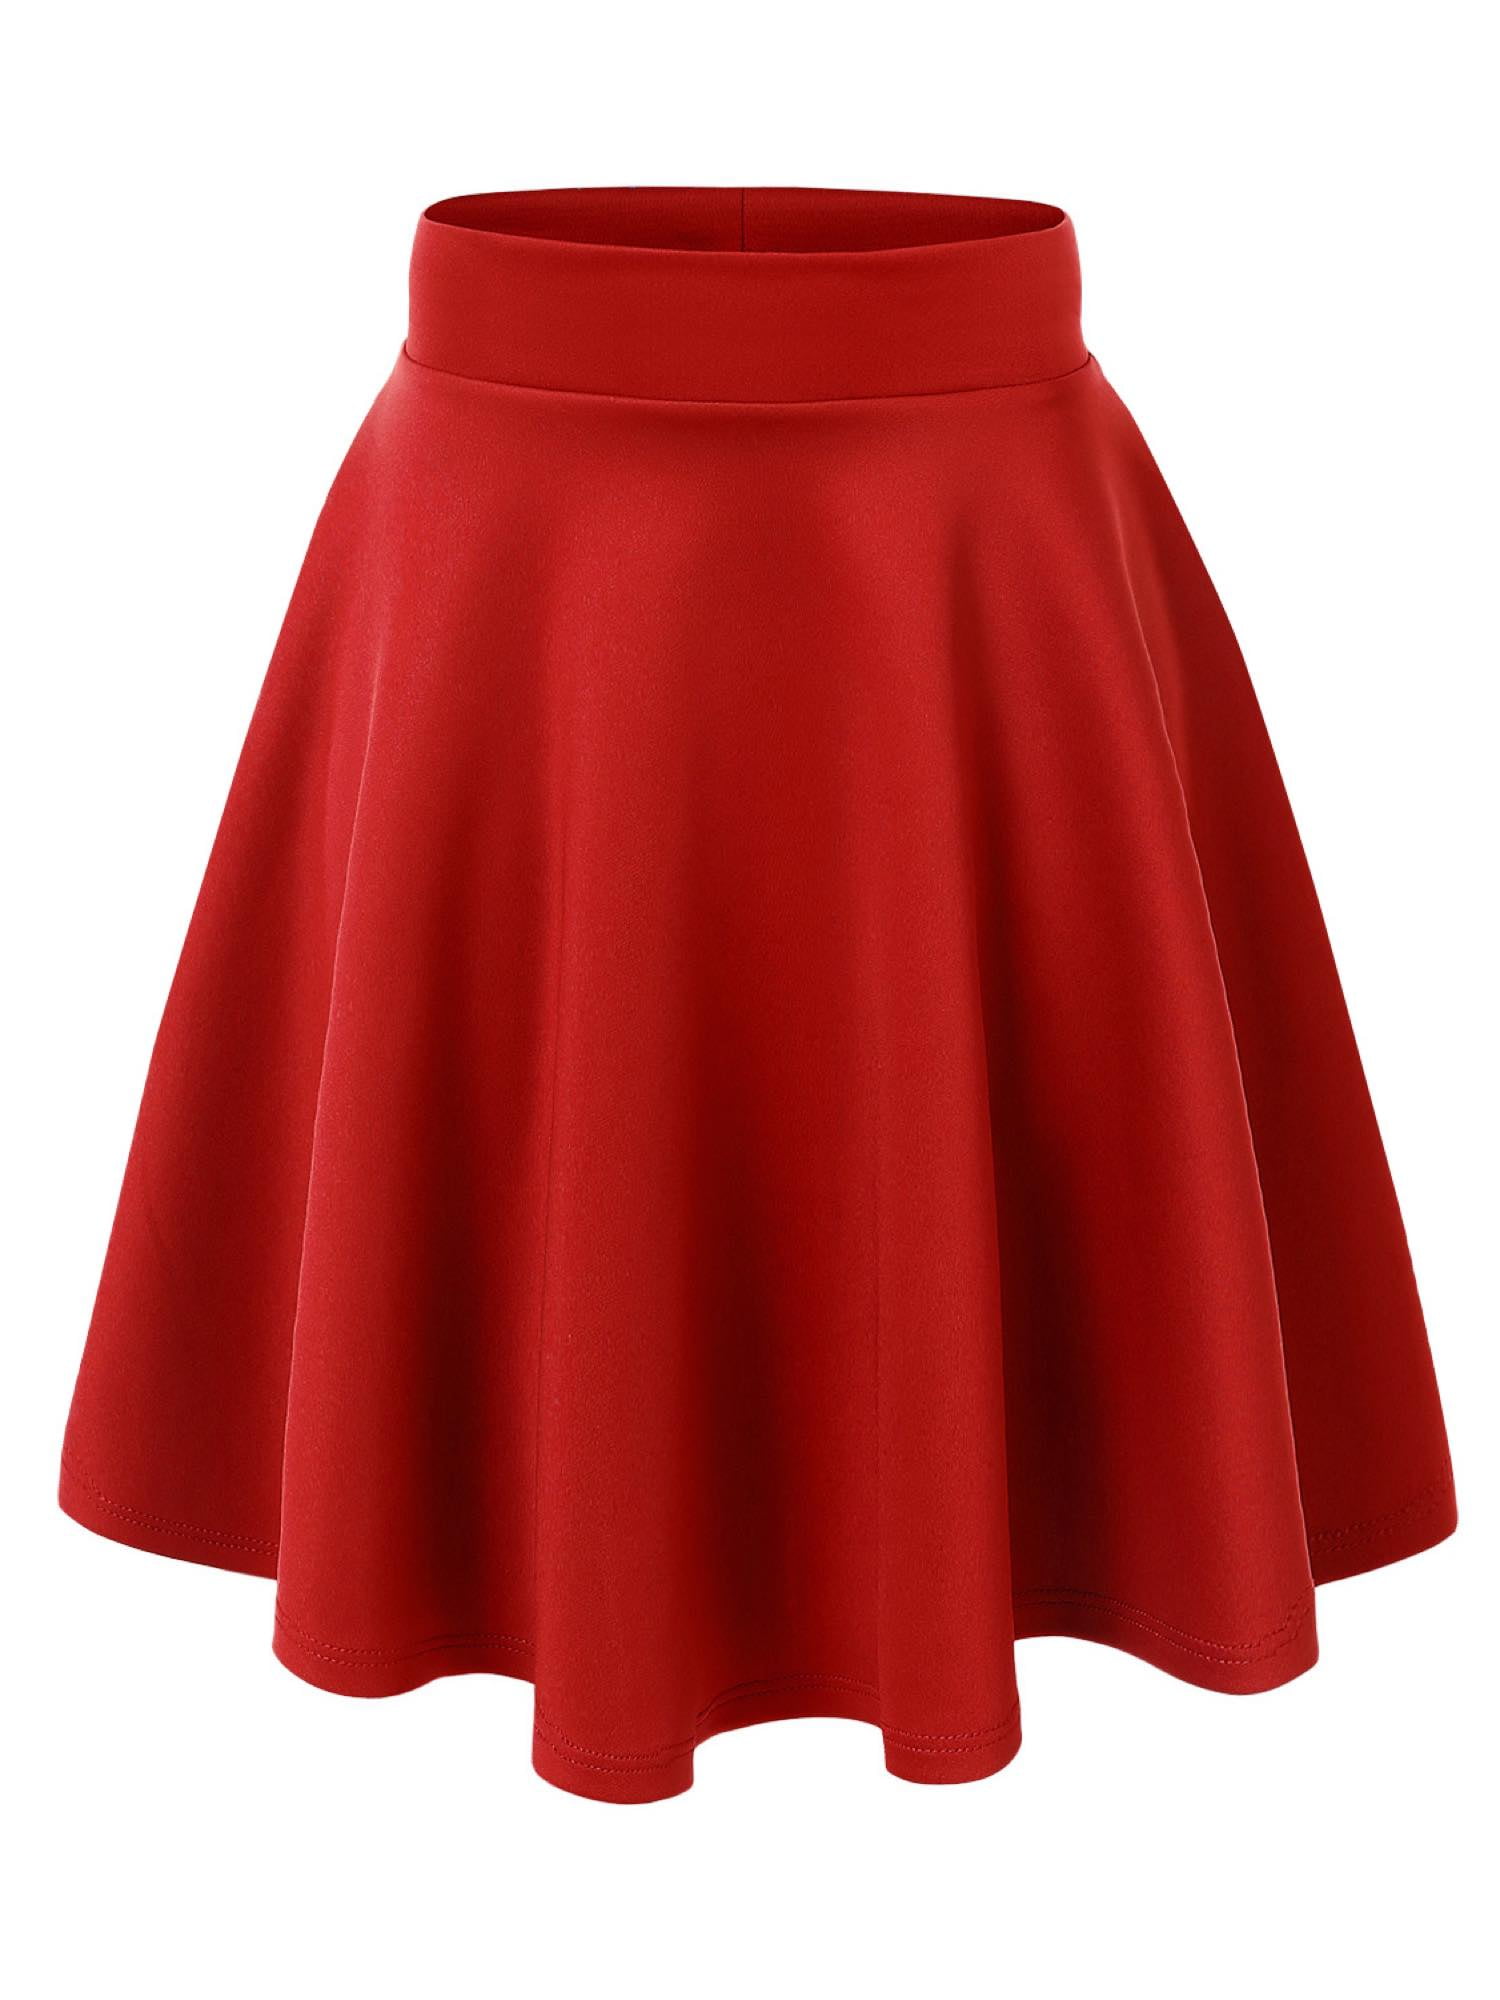 MBJ WB829 Womens Flirty Flare Skirt L RED